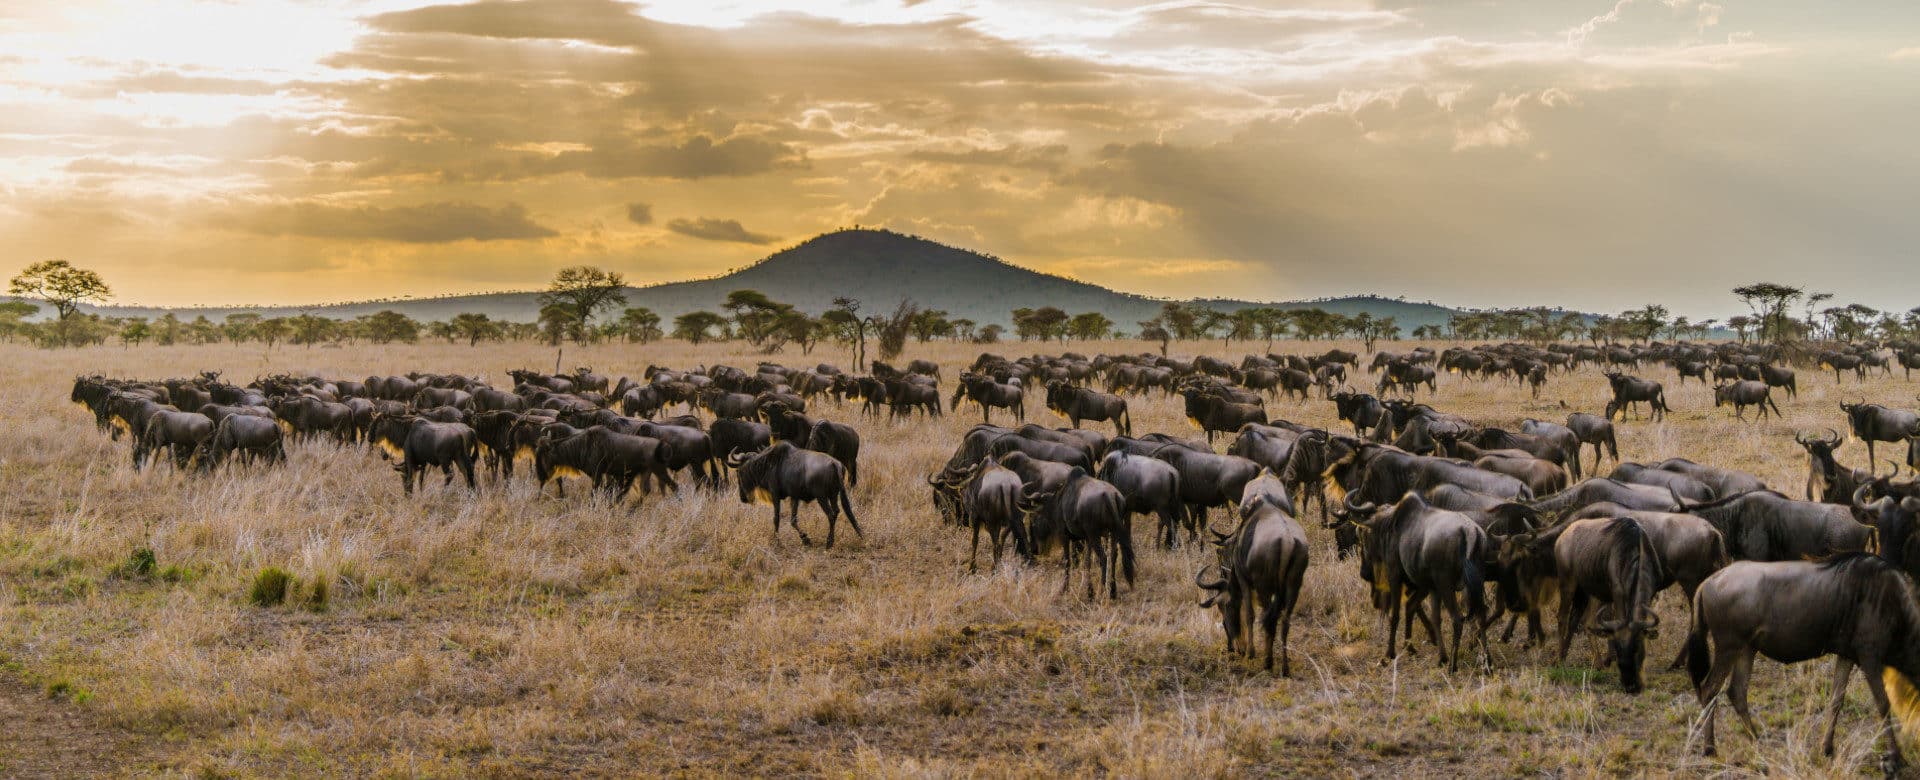 Bucketlist Migration Safari